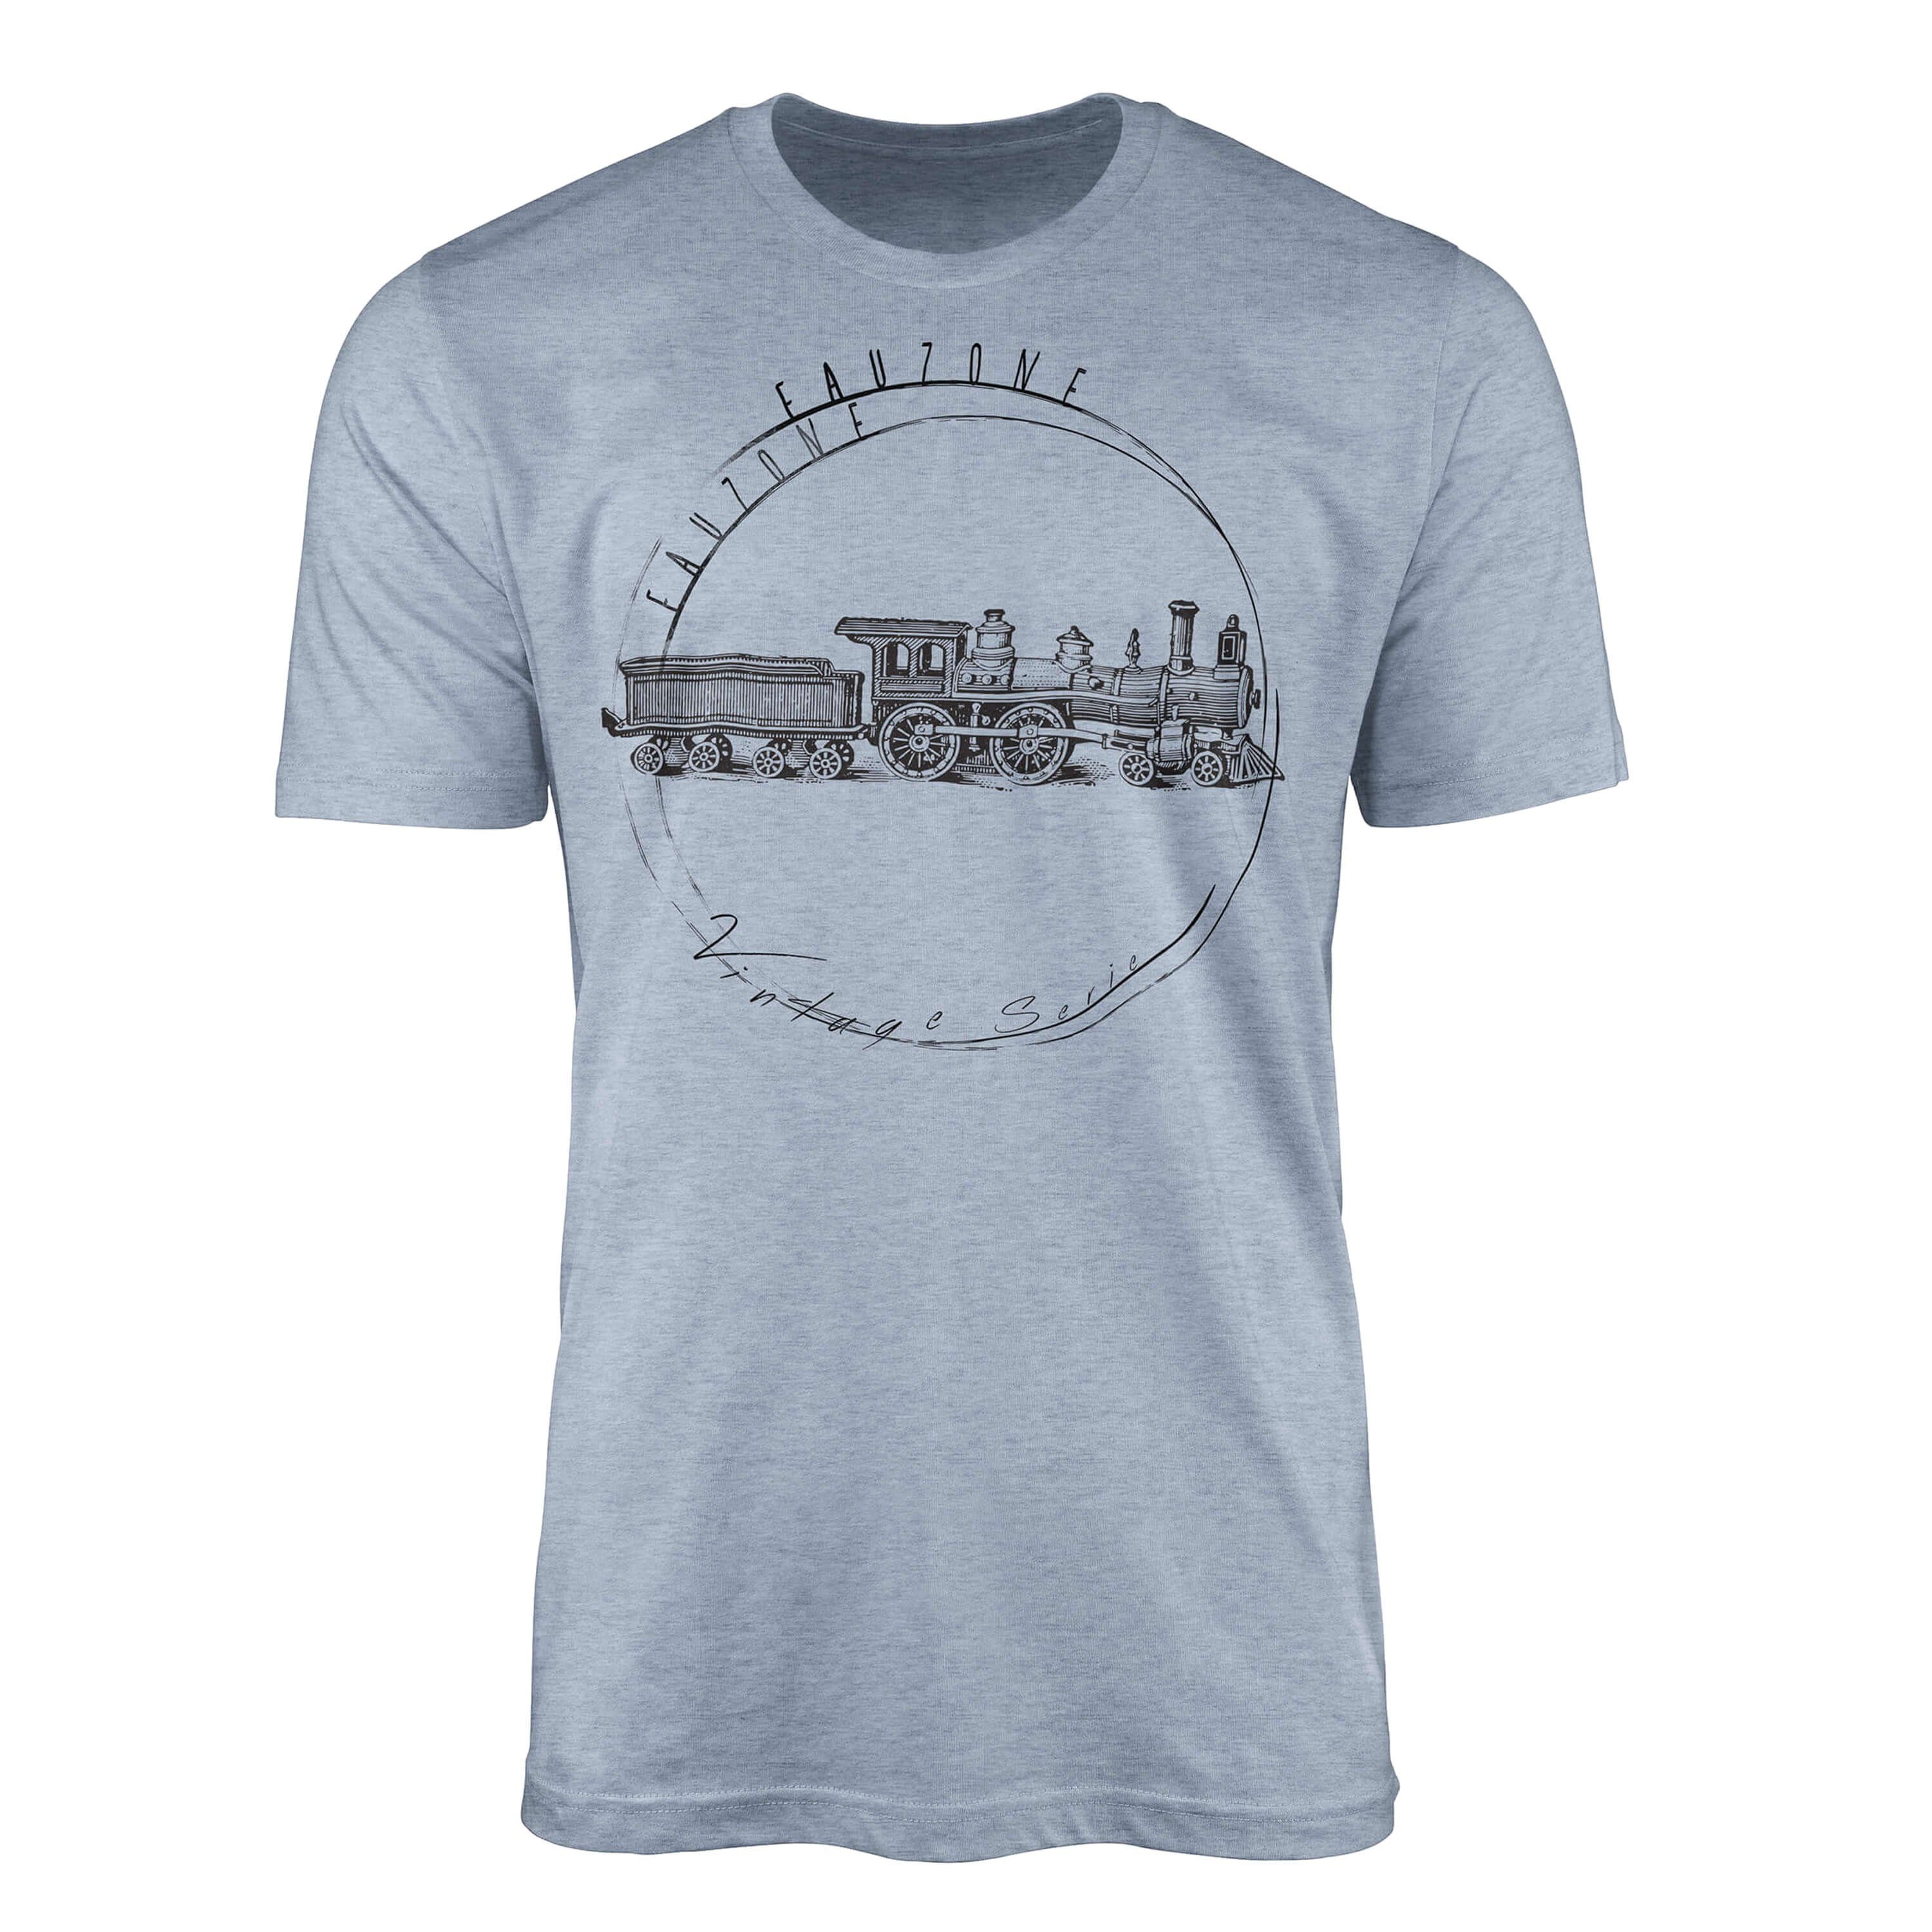 Sinus T-Shirt Herren Art Stonewash T-Shirt Denim Vintage Lokomotive